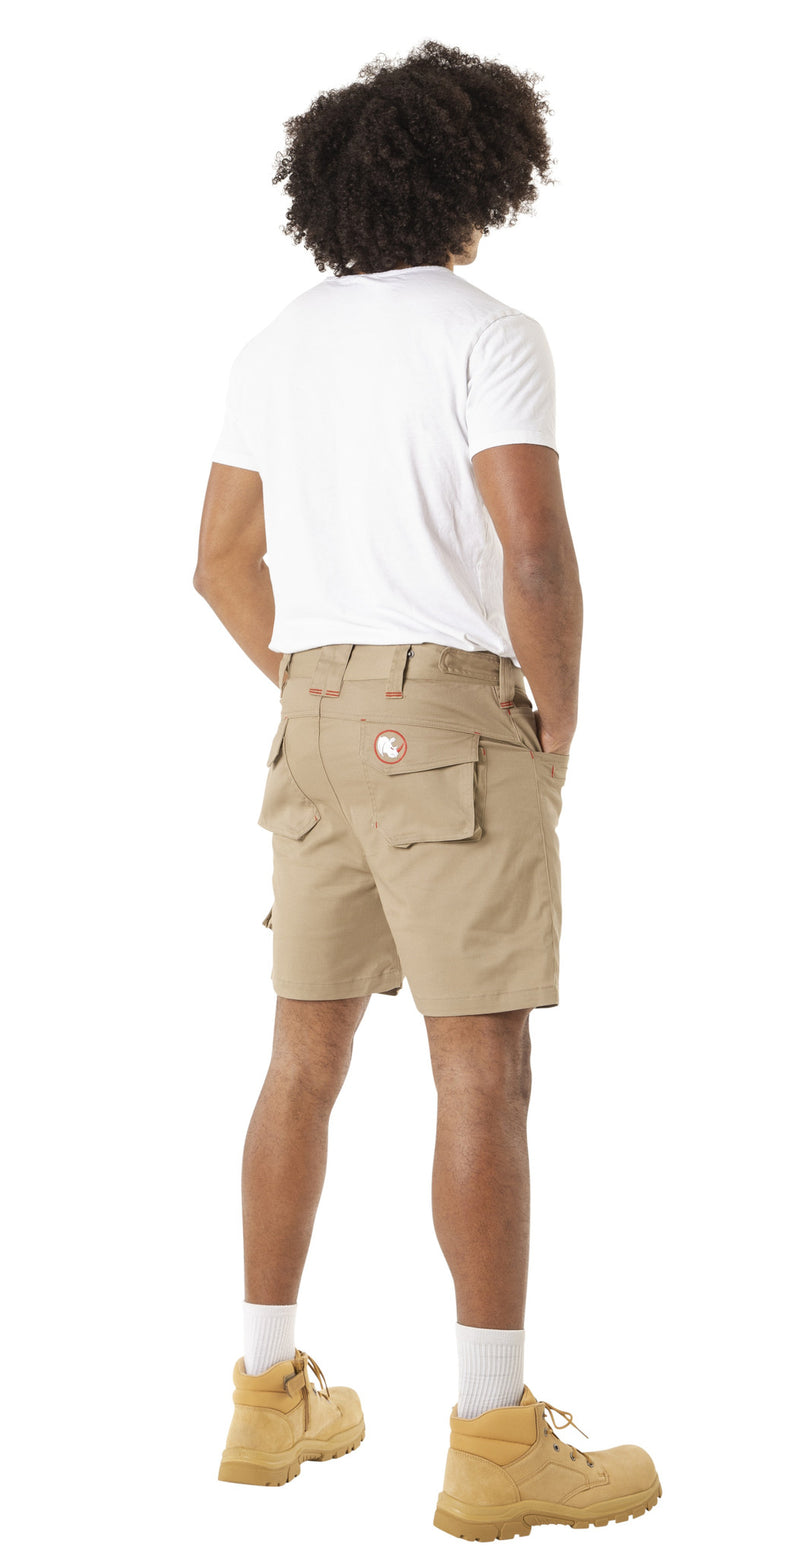 Mens Work Shorts Flexible Durable Tough - Beige Khaki [ SIZE 30 ]